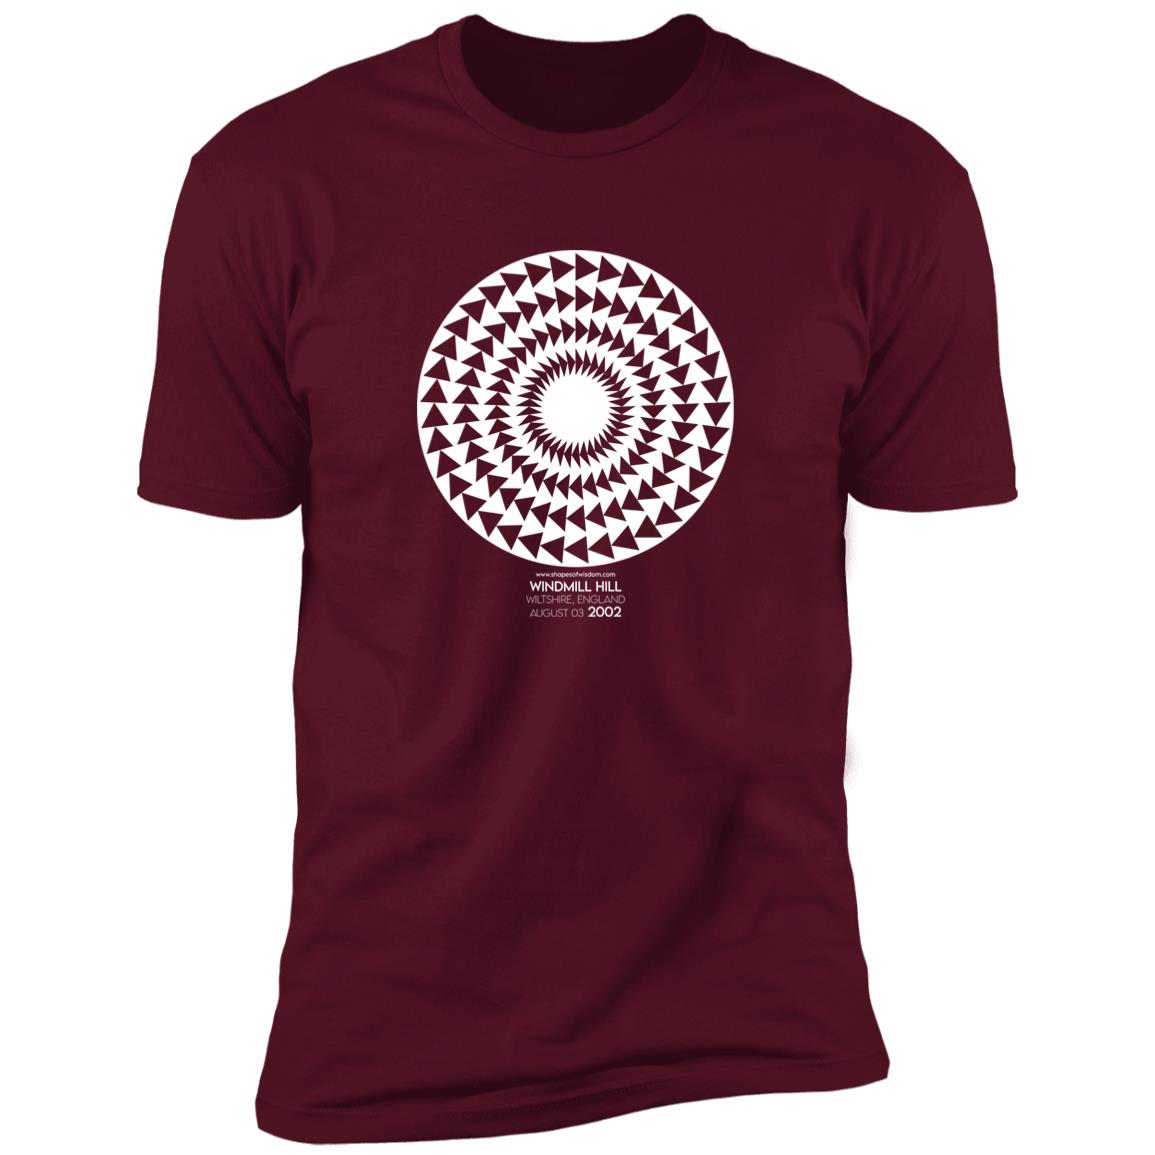 Crop Circle Premium T-Shirt - Windmill Hill 7